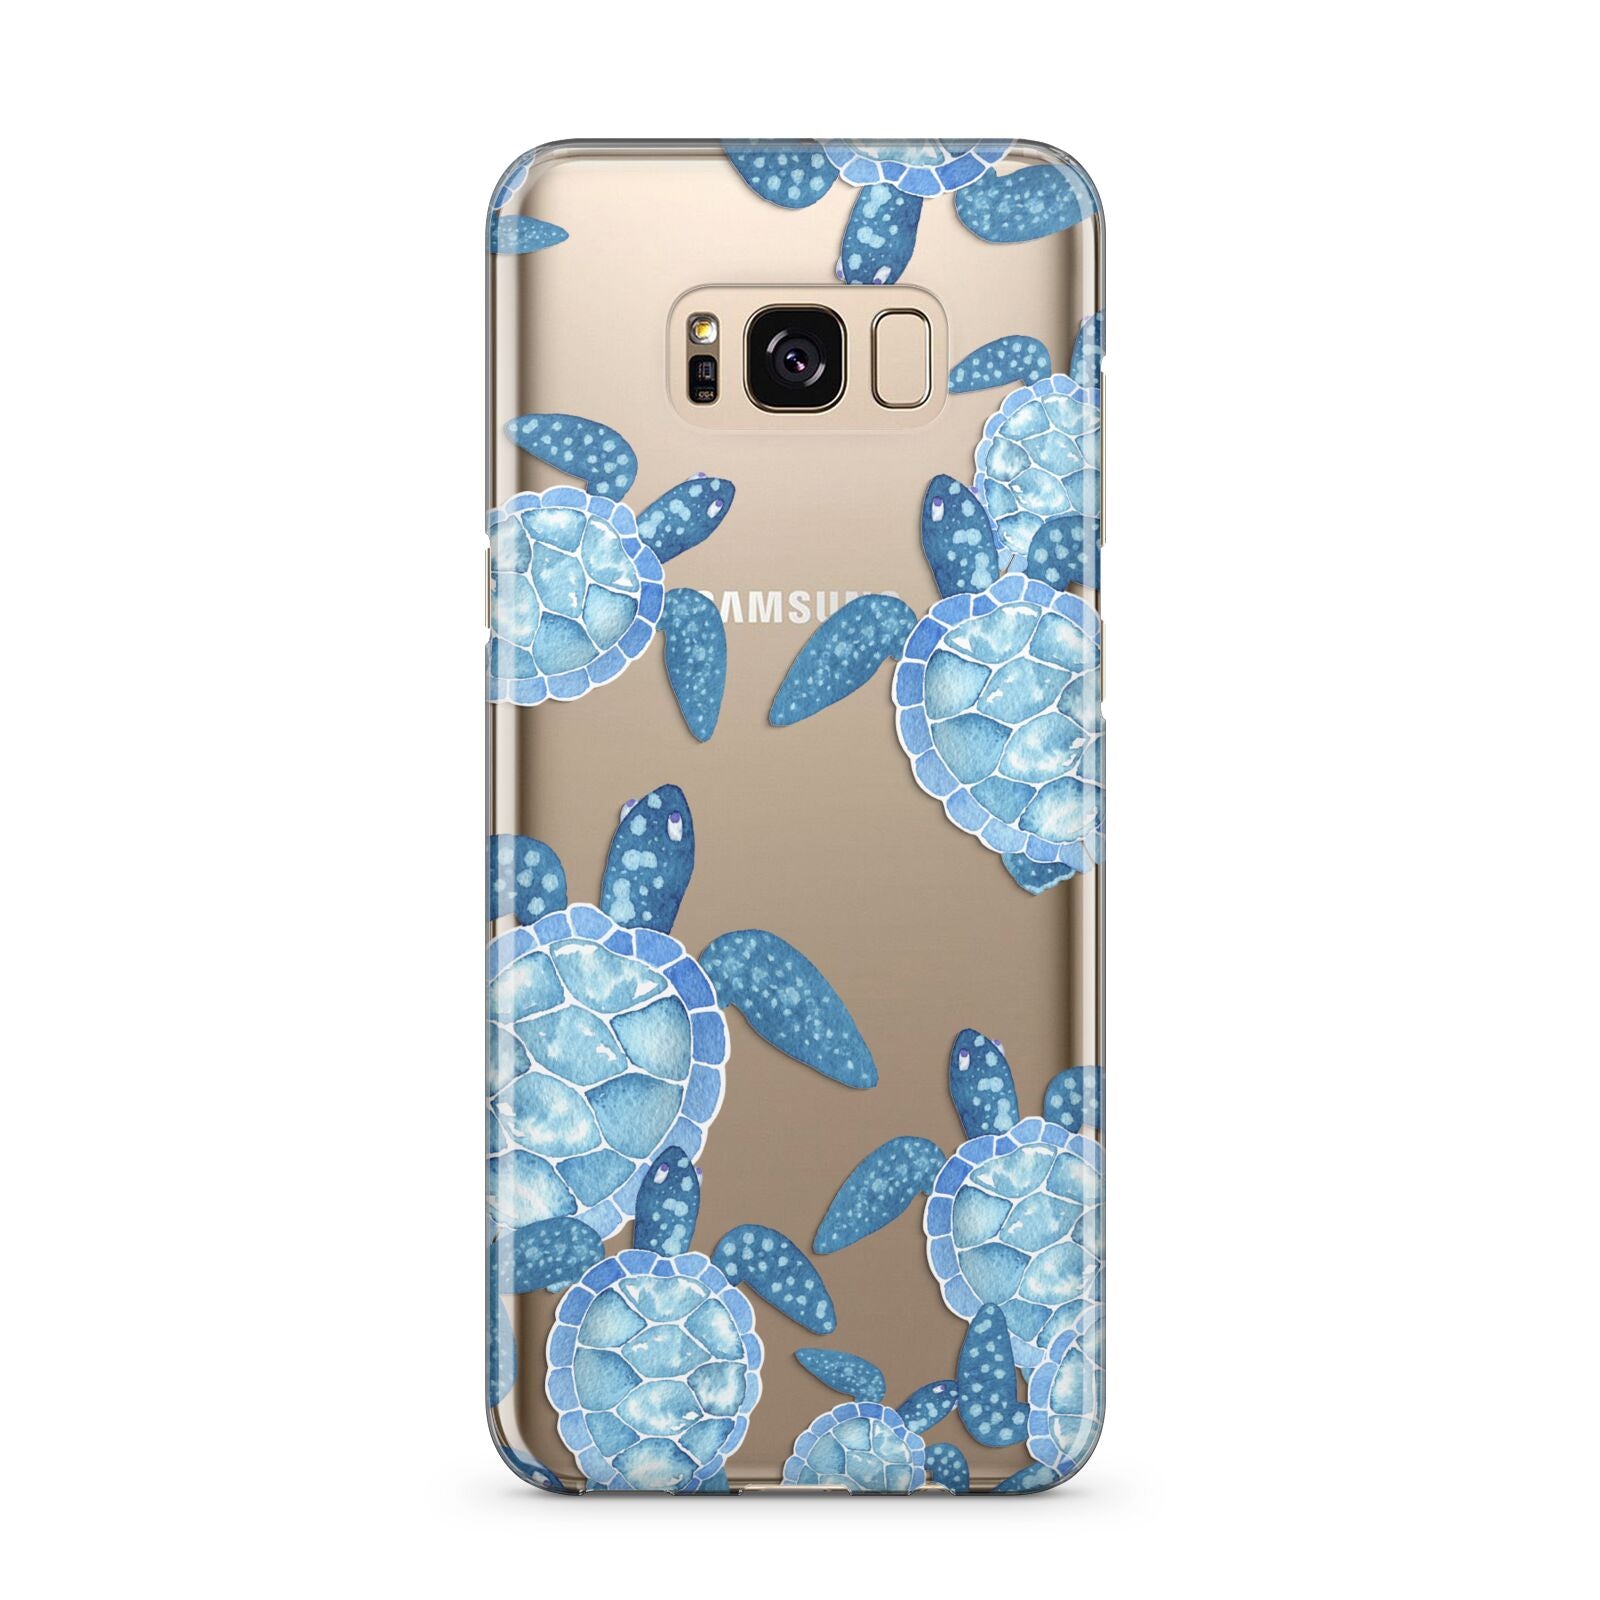 Turtle Samsung Galaxy S8 Plus Case